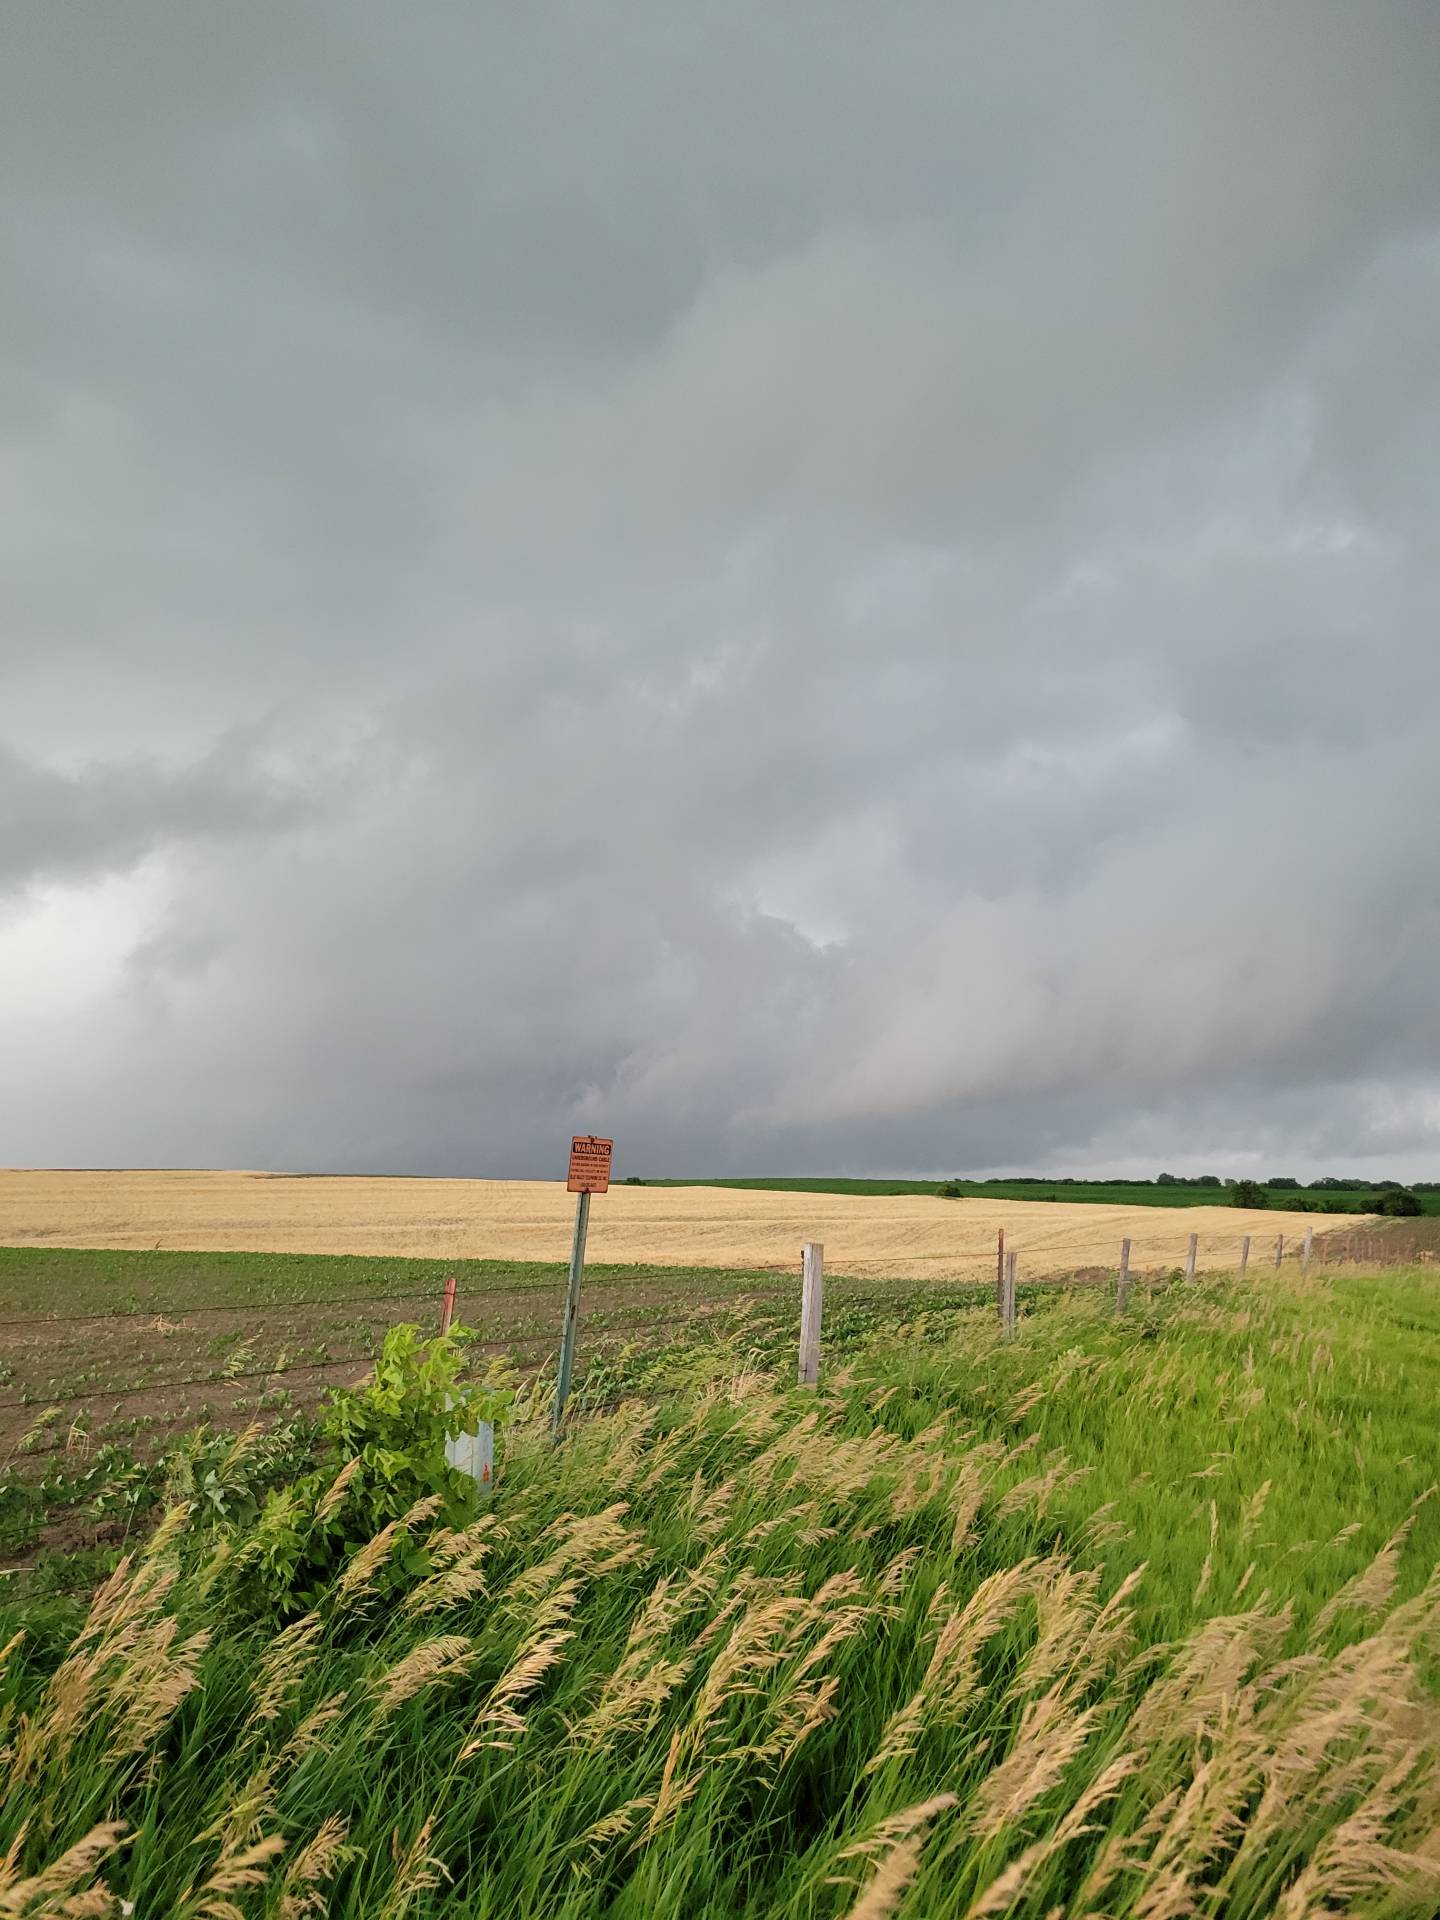 The back side of a severe storm near Vermillion, Kansas. #kswx 